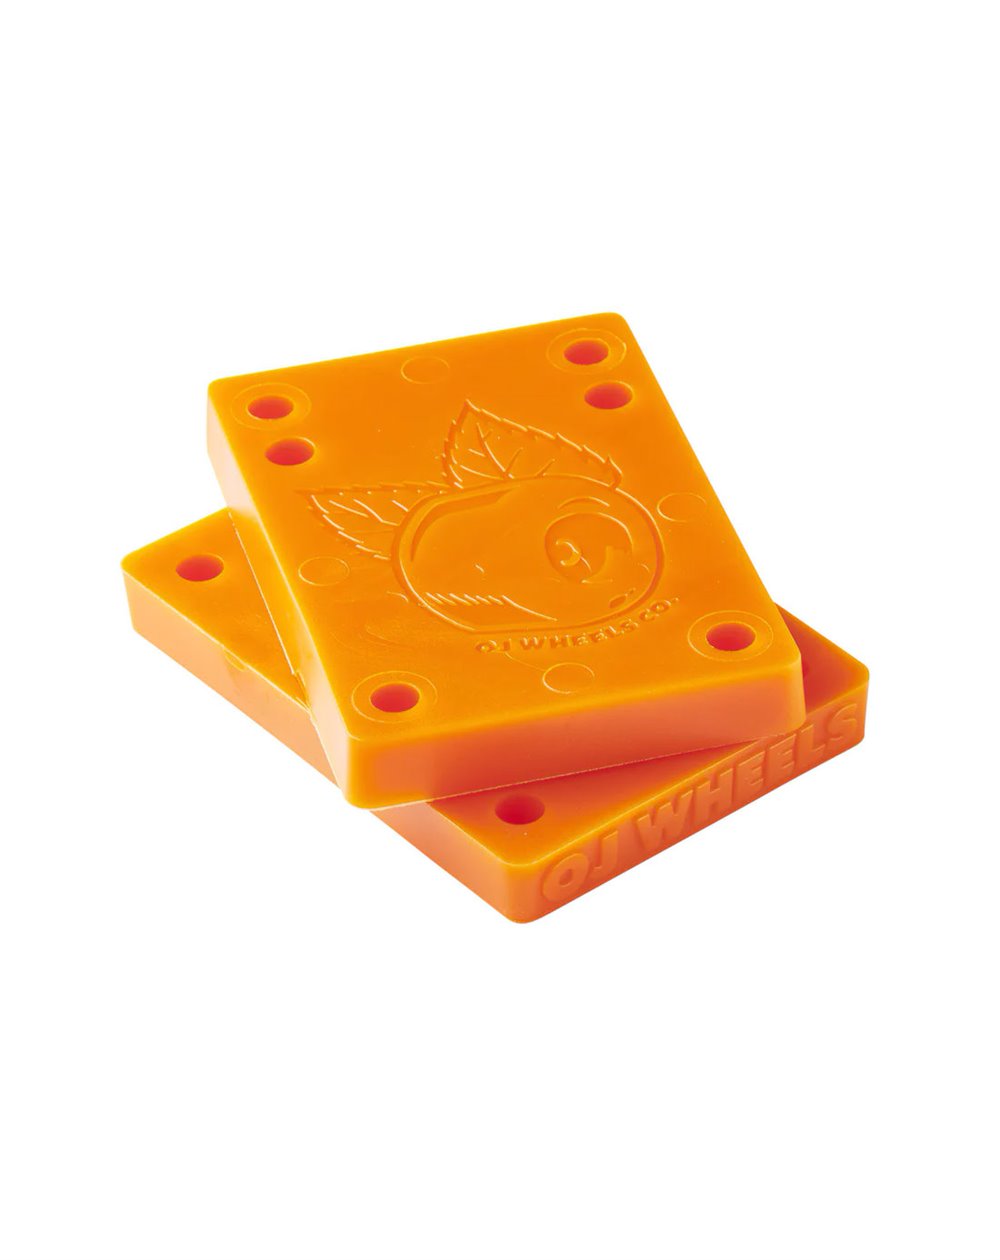 OJ Riser Pads Skateboard Juice Cubes 3/8-inch Orange 2 pc